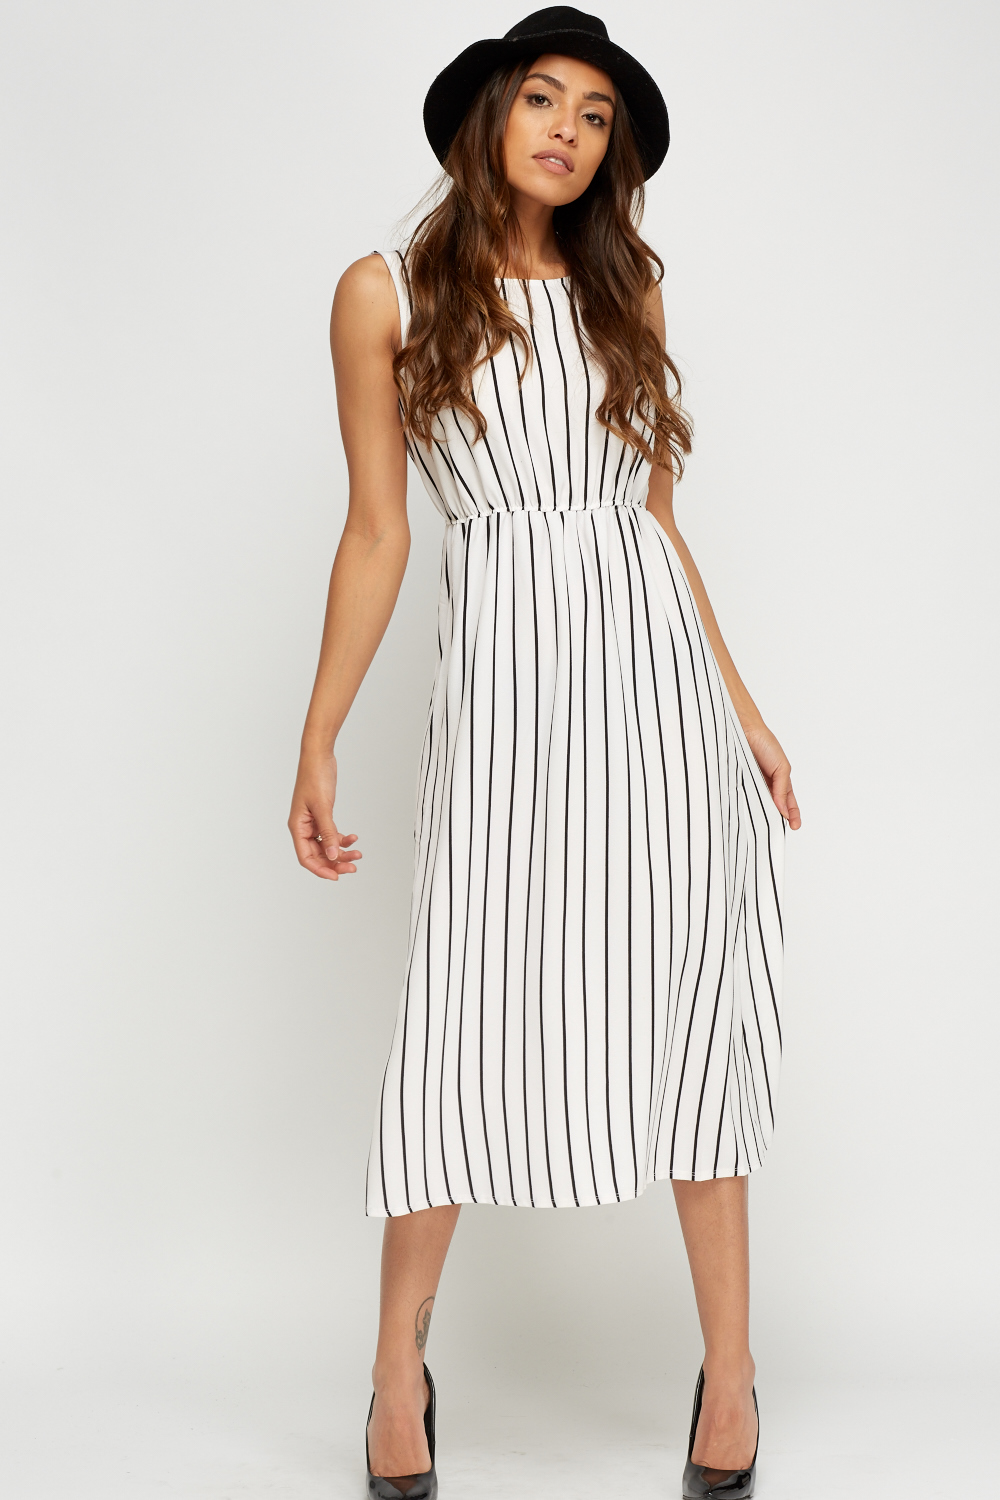 Striped Sleeveless Midi Dress - Just $7